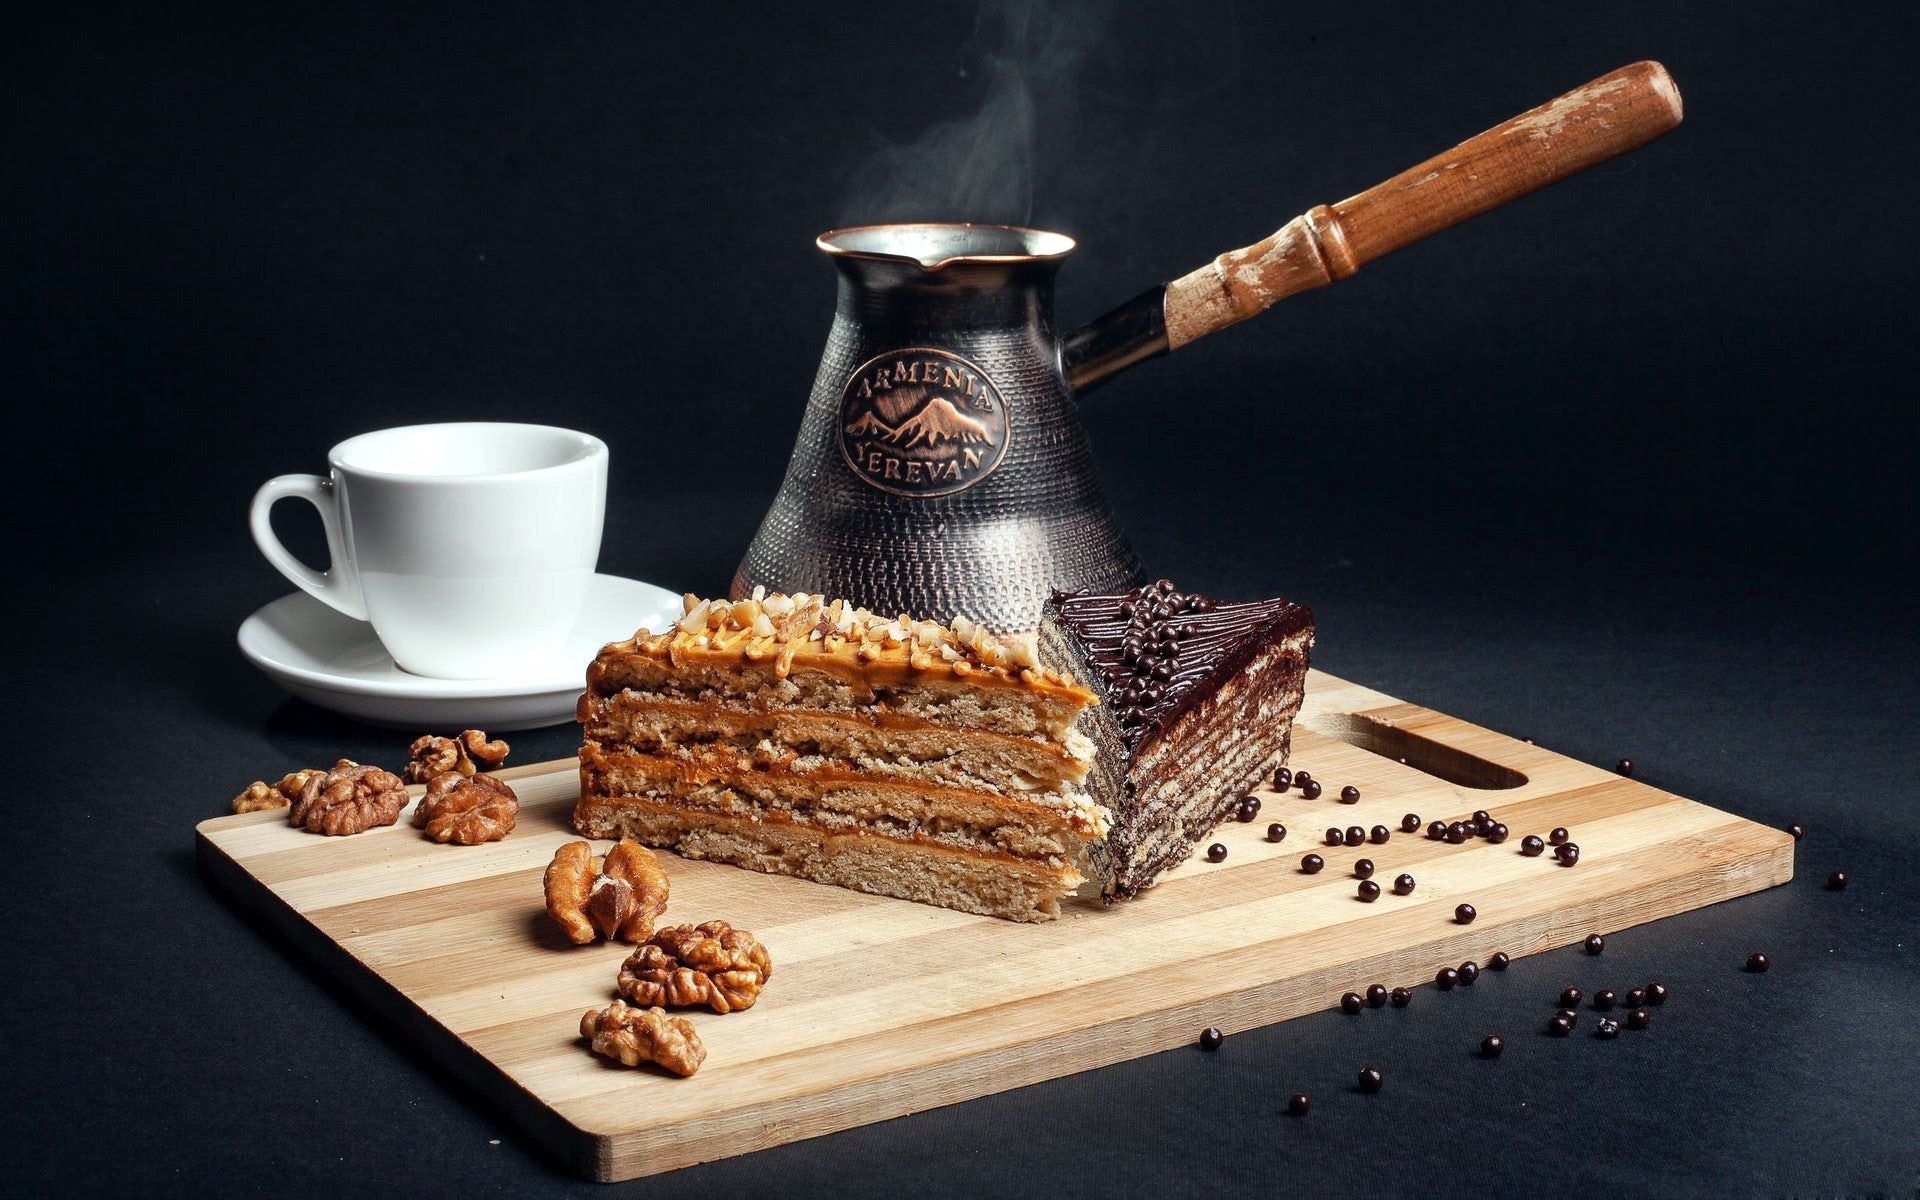 General 1920x1200 food sweets cake still life coffee mug walnuts cutting board simple background closeup